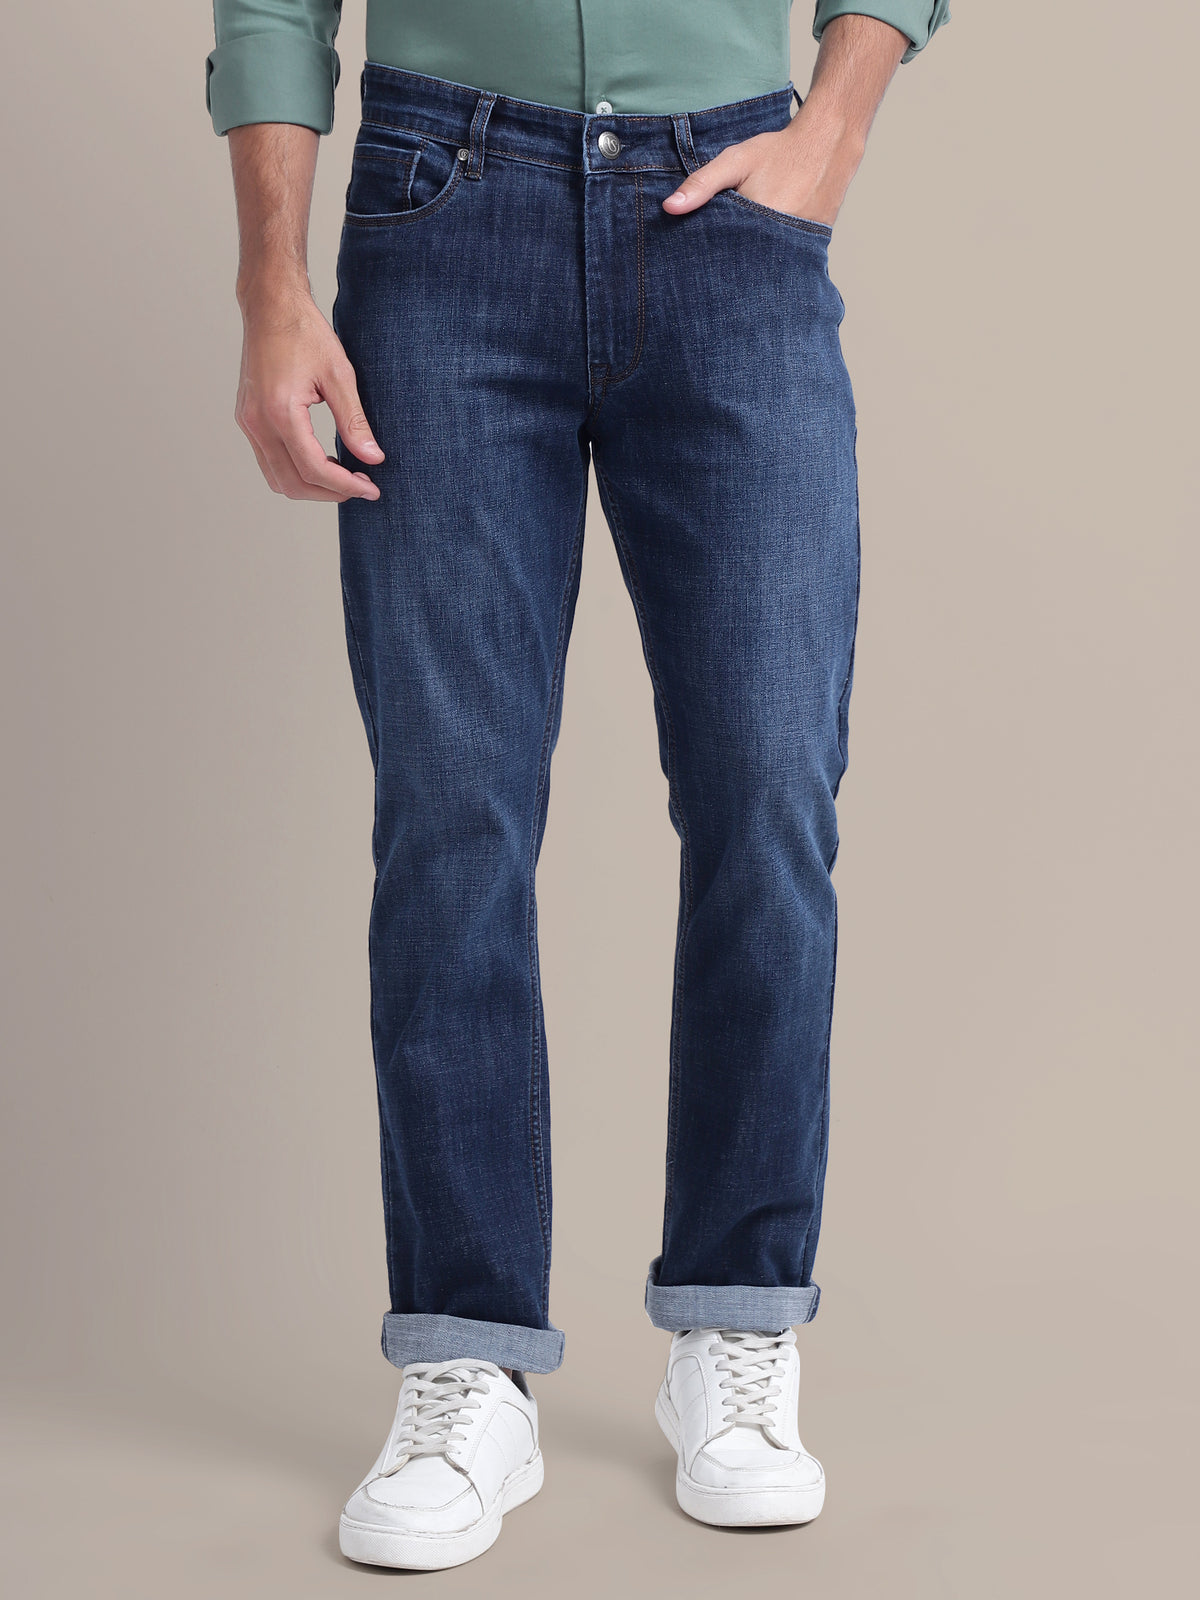 Men's Premium Stretchable Jeans Straight Fit